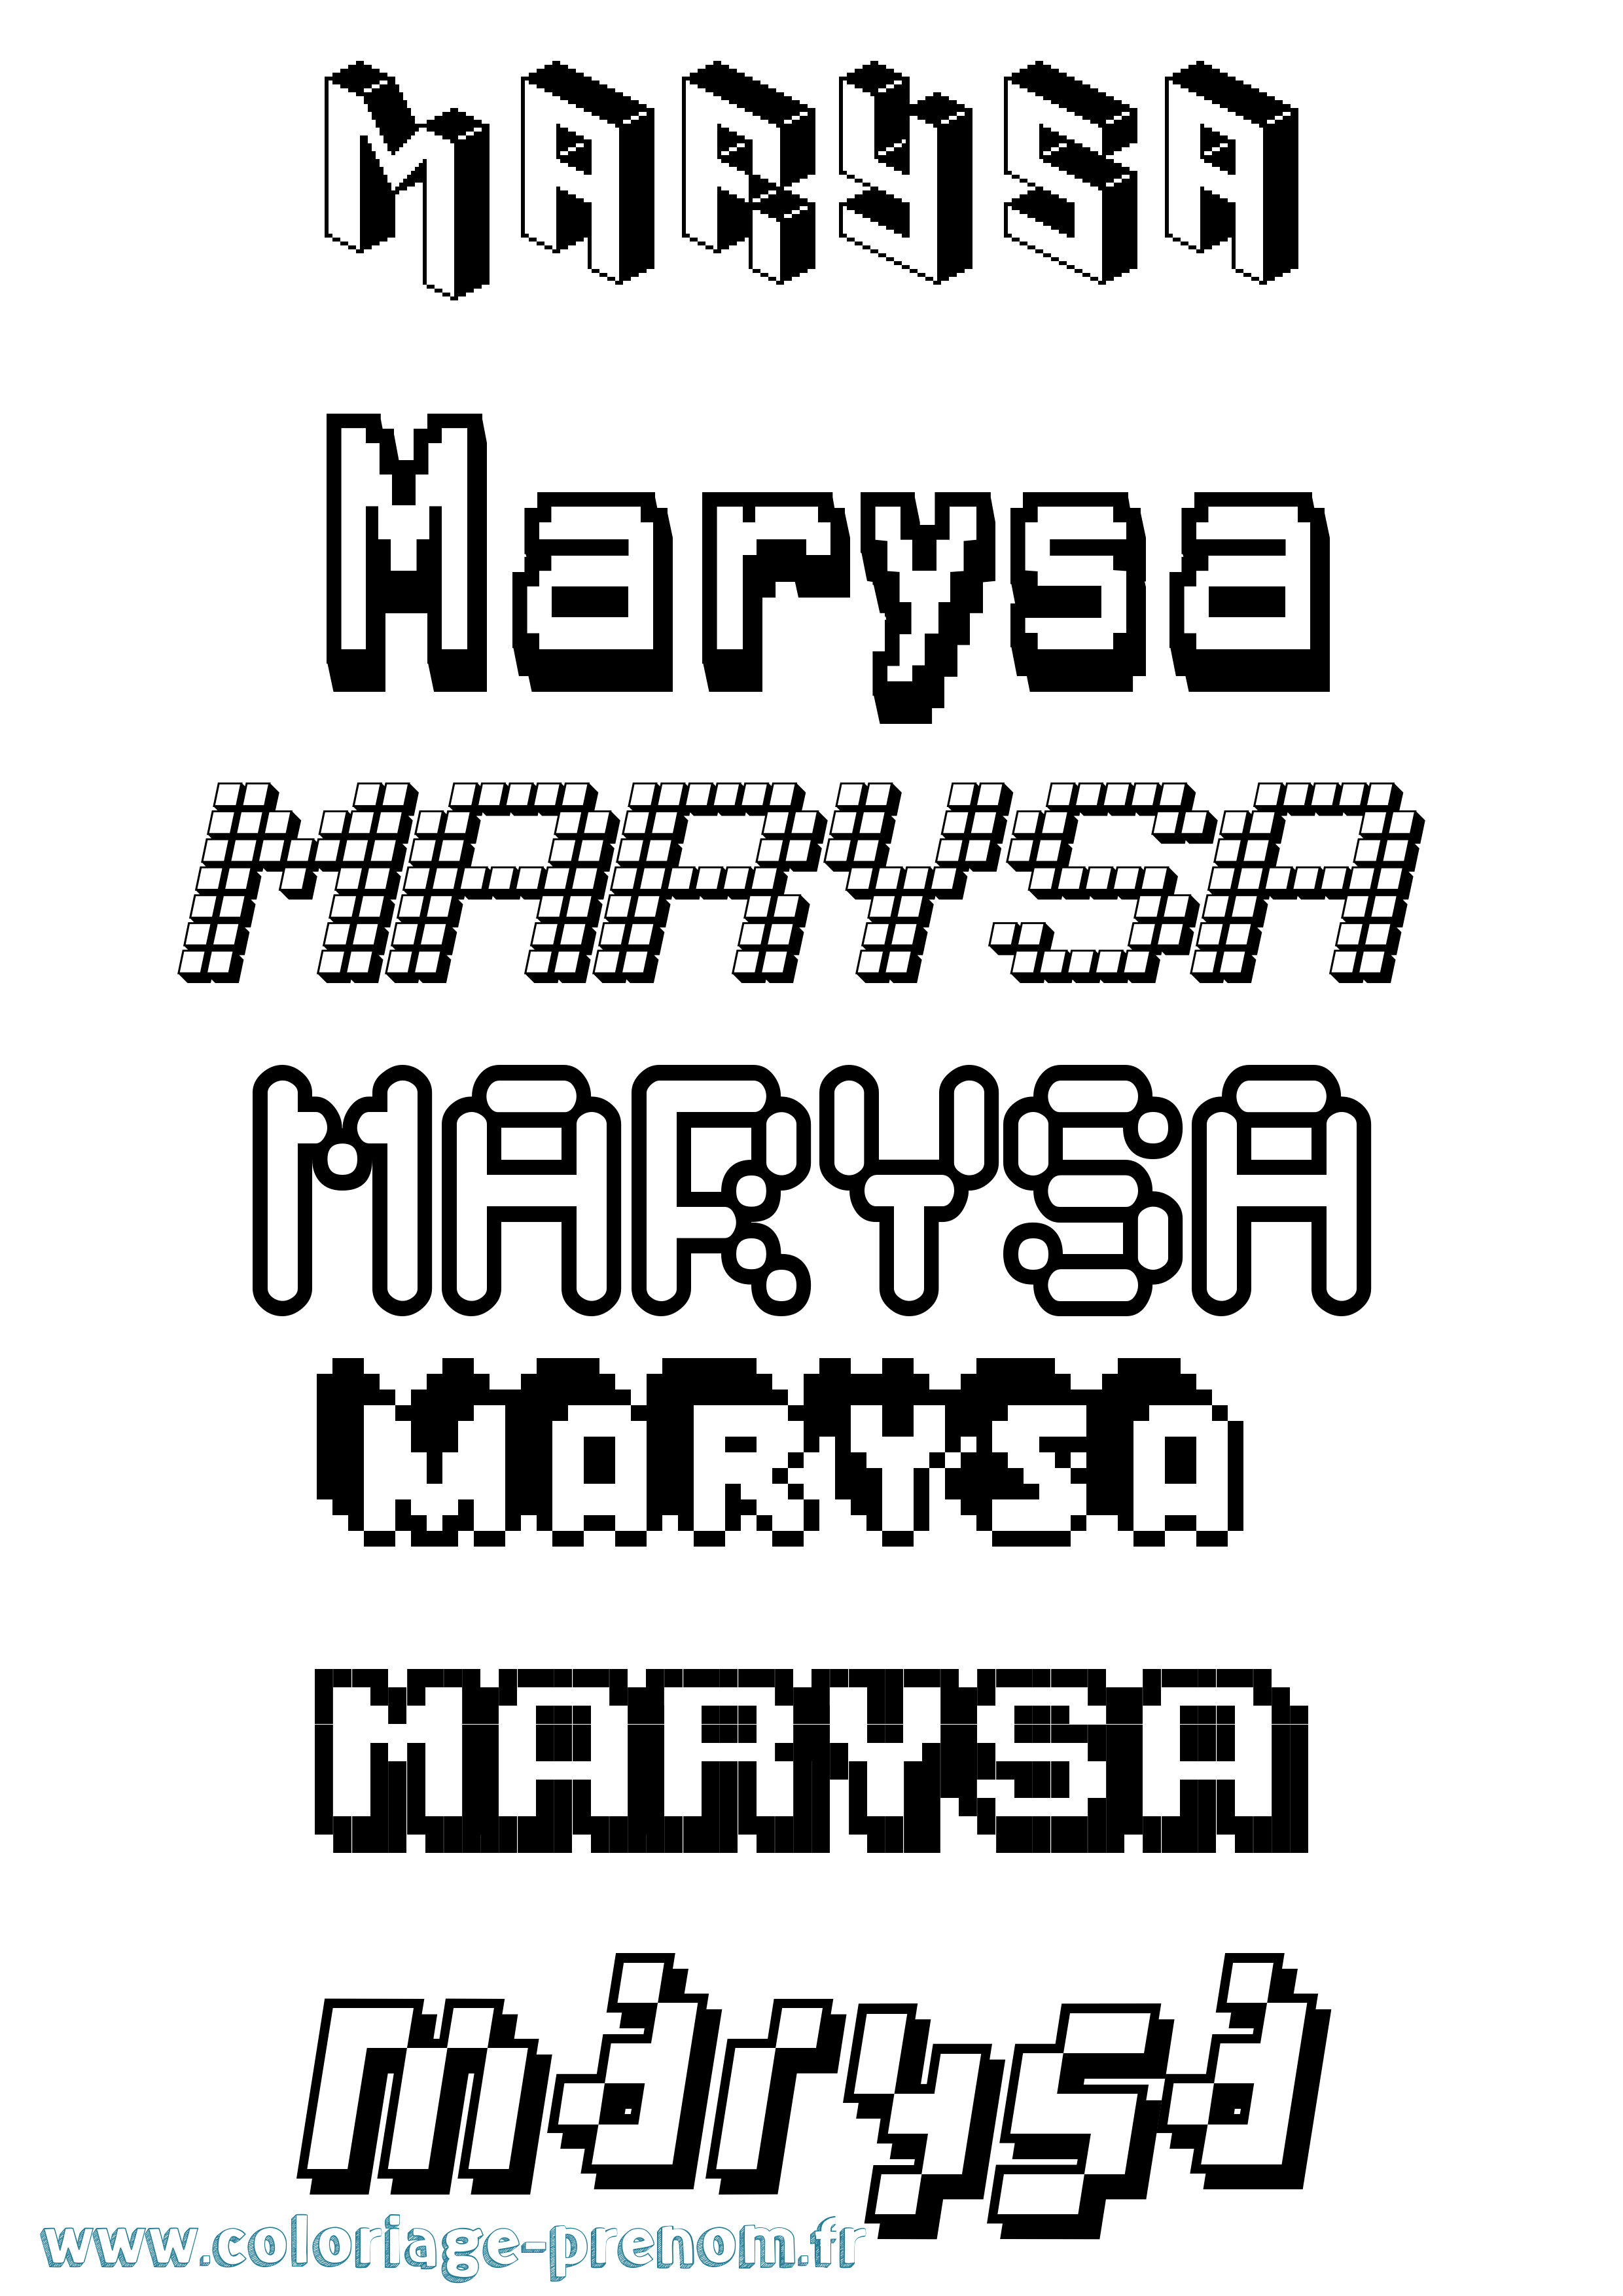 Coloriage prénom Marysa Pixel